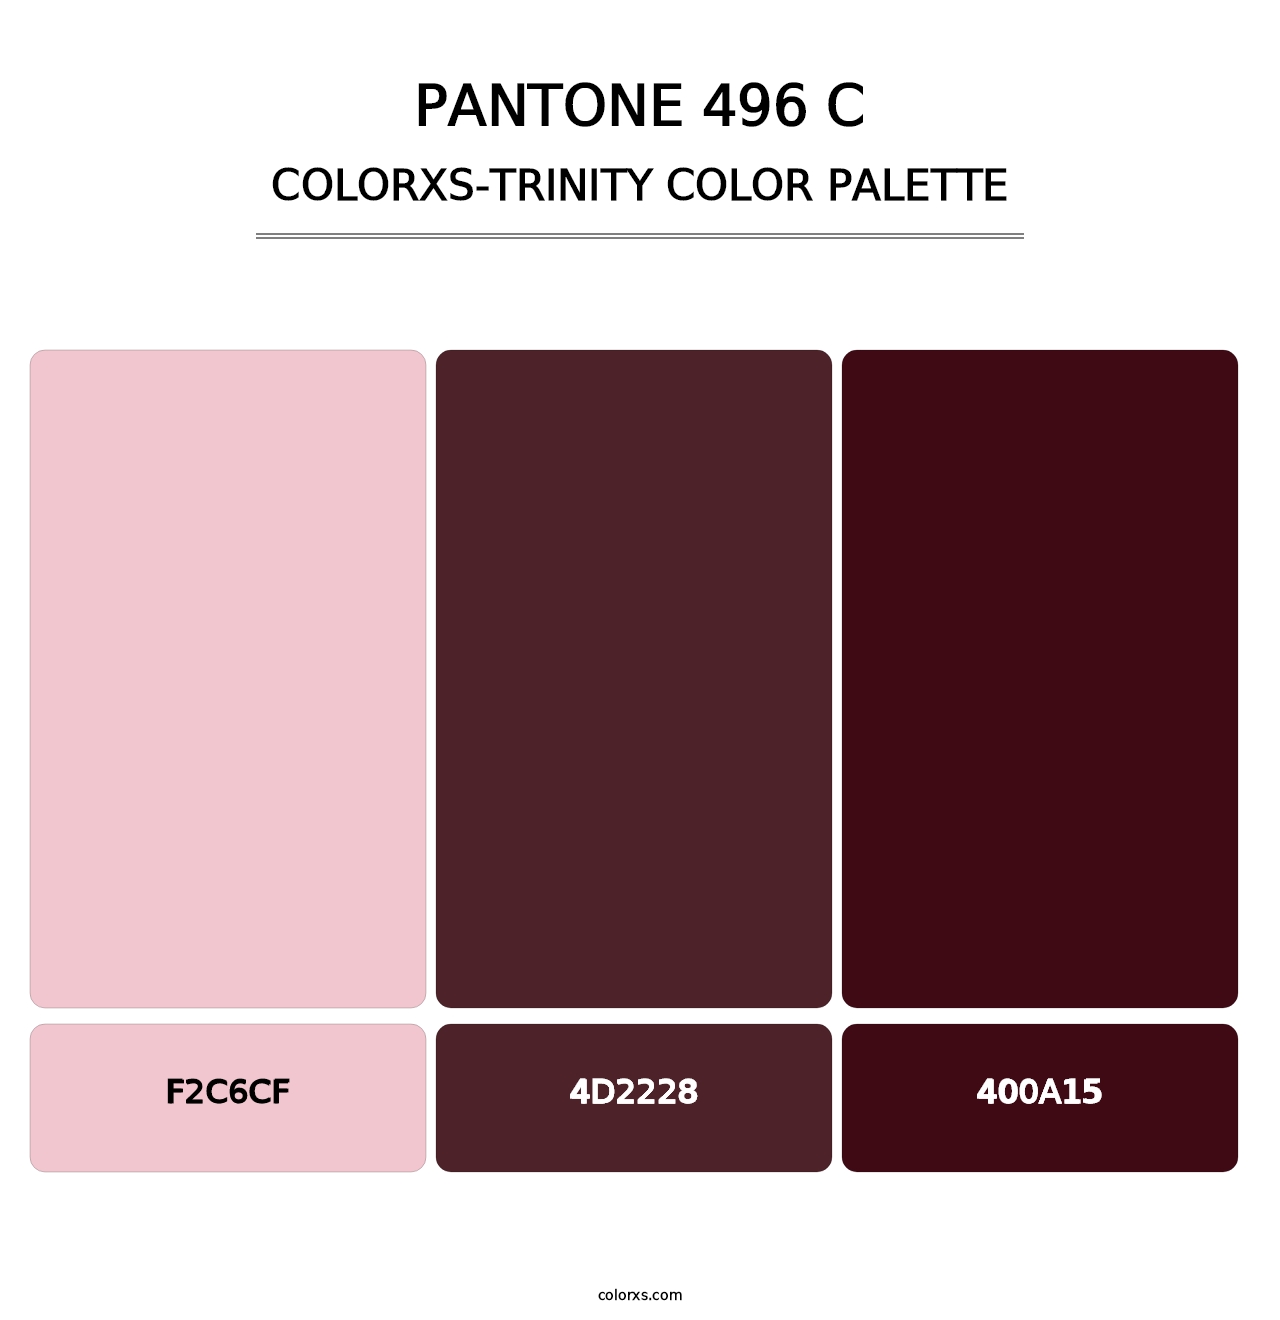 PANTONE 496 C - Colorxs Trinity Palette